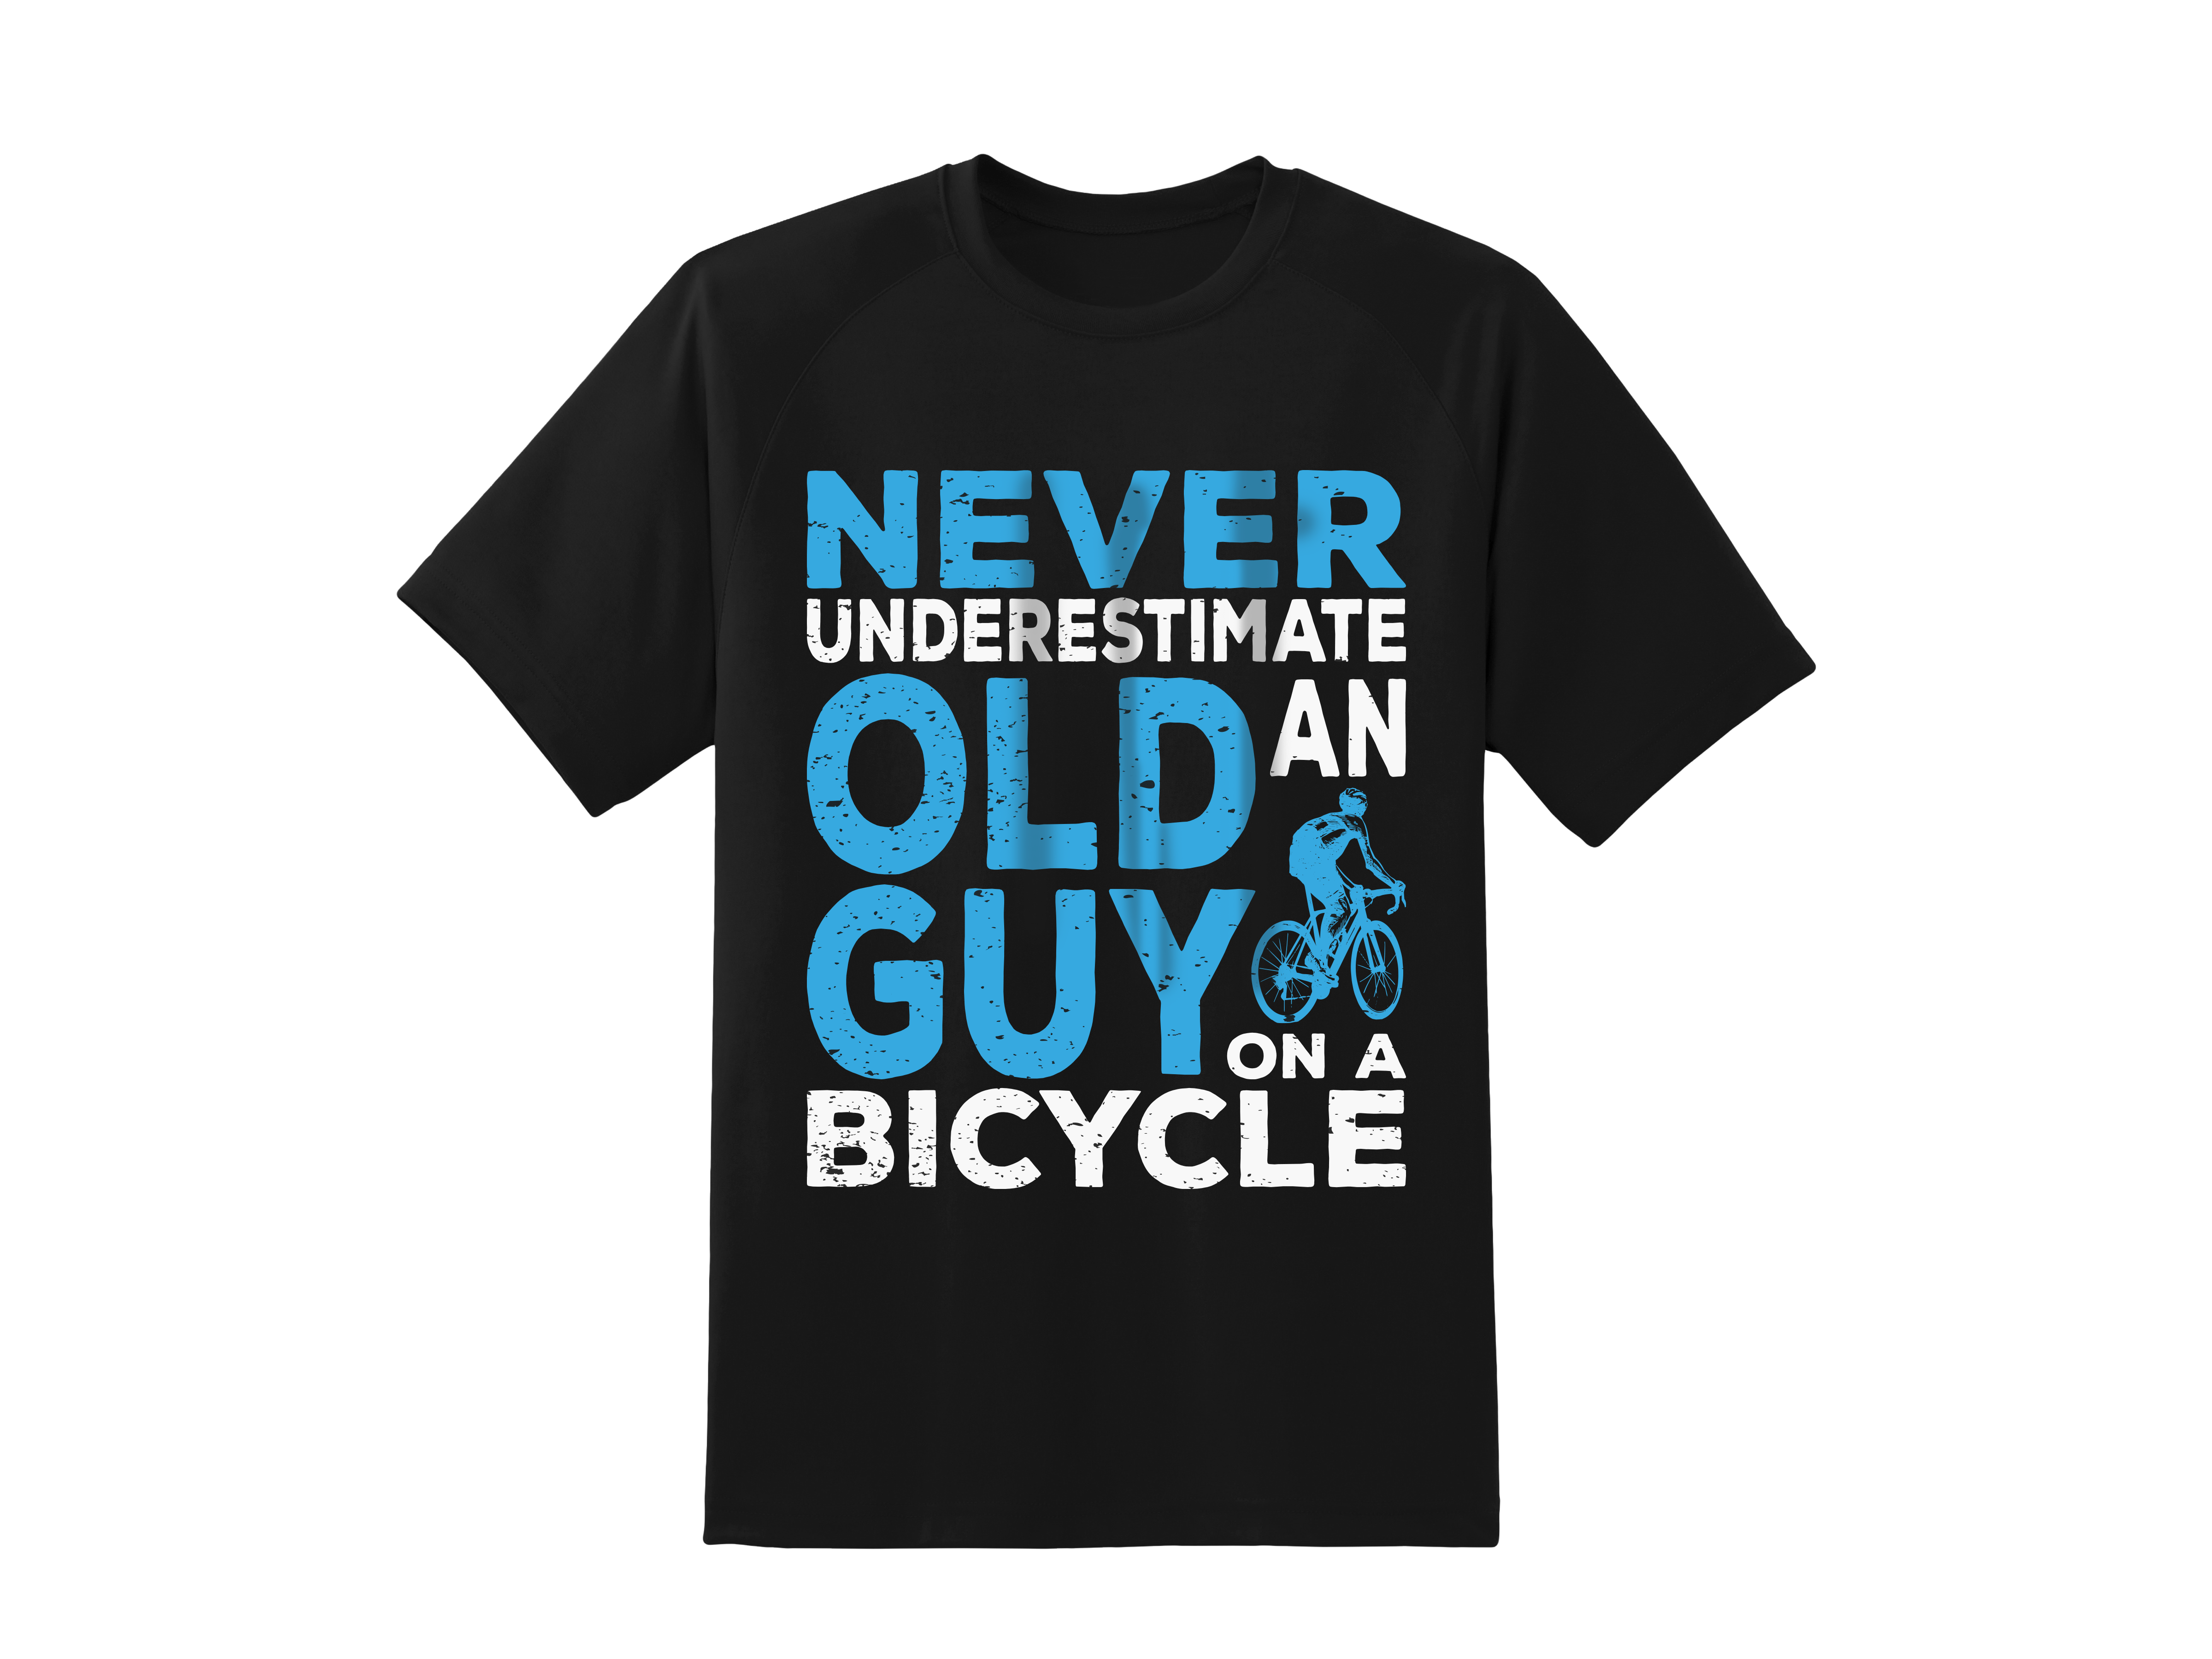 Old Guy Bicycle Graphic by shuvrosenn · Creative Fabrica